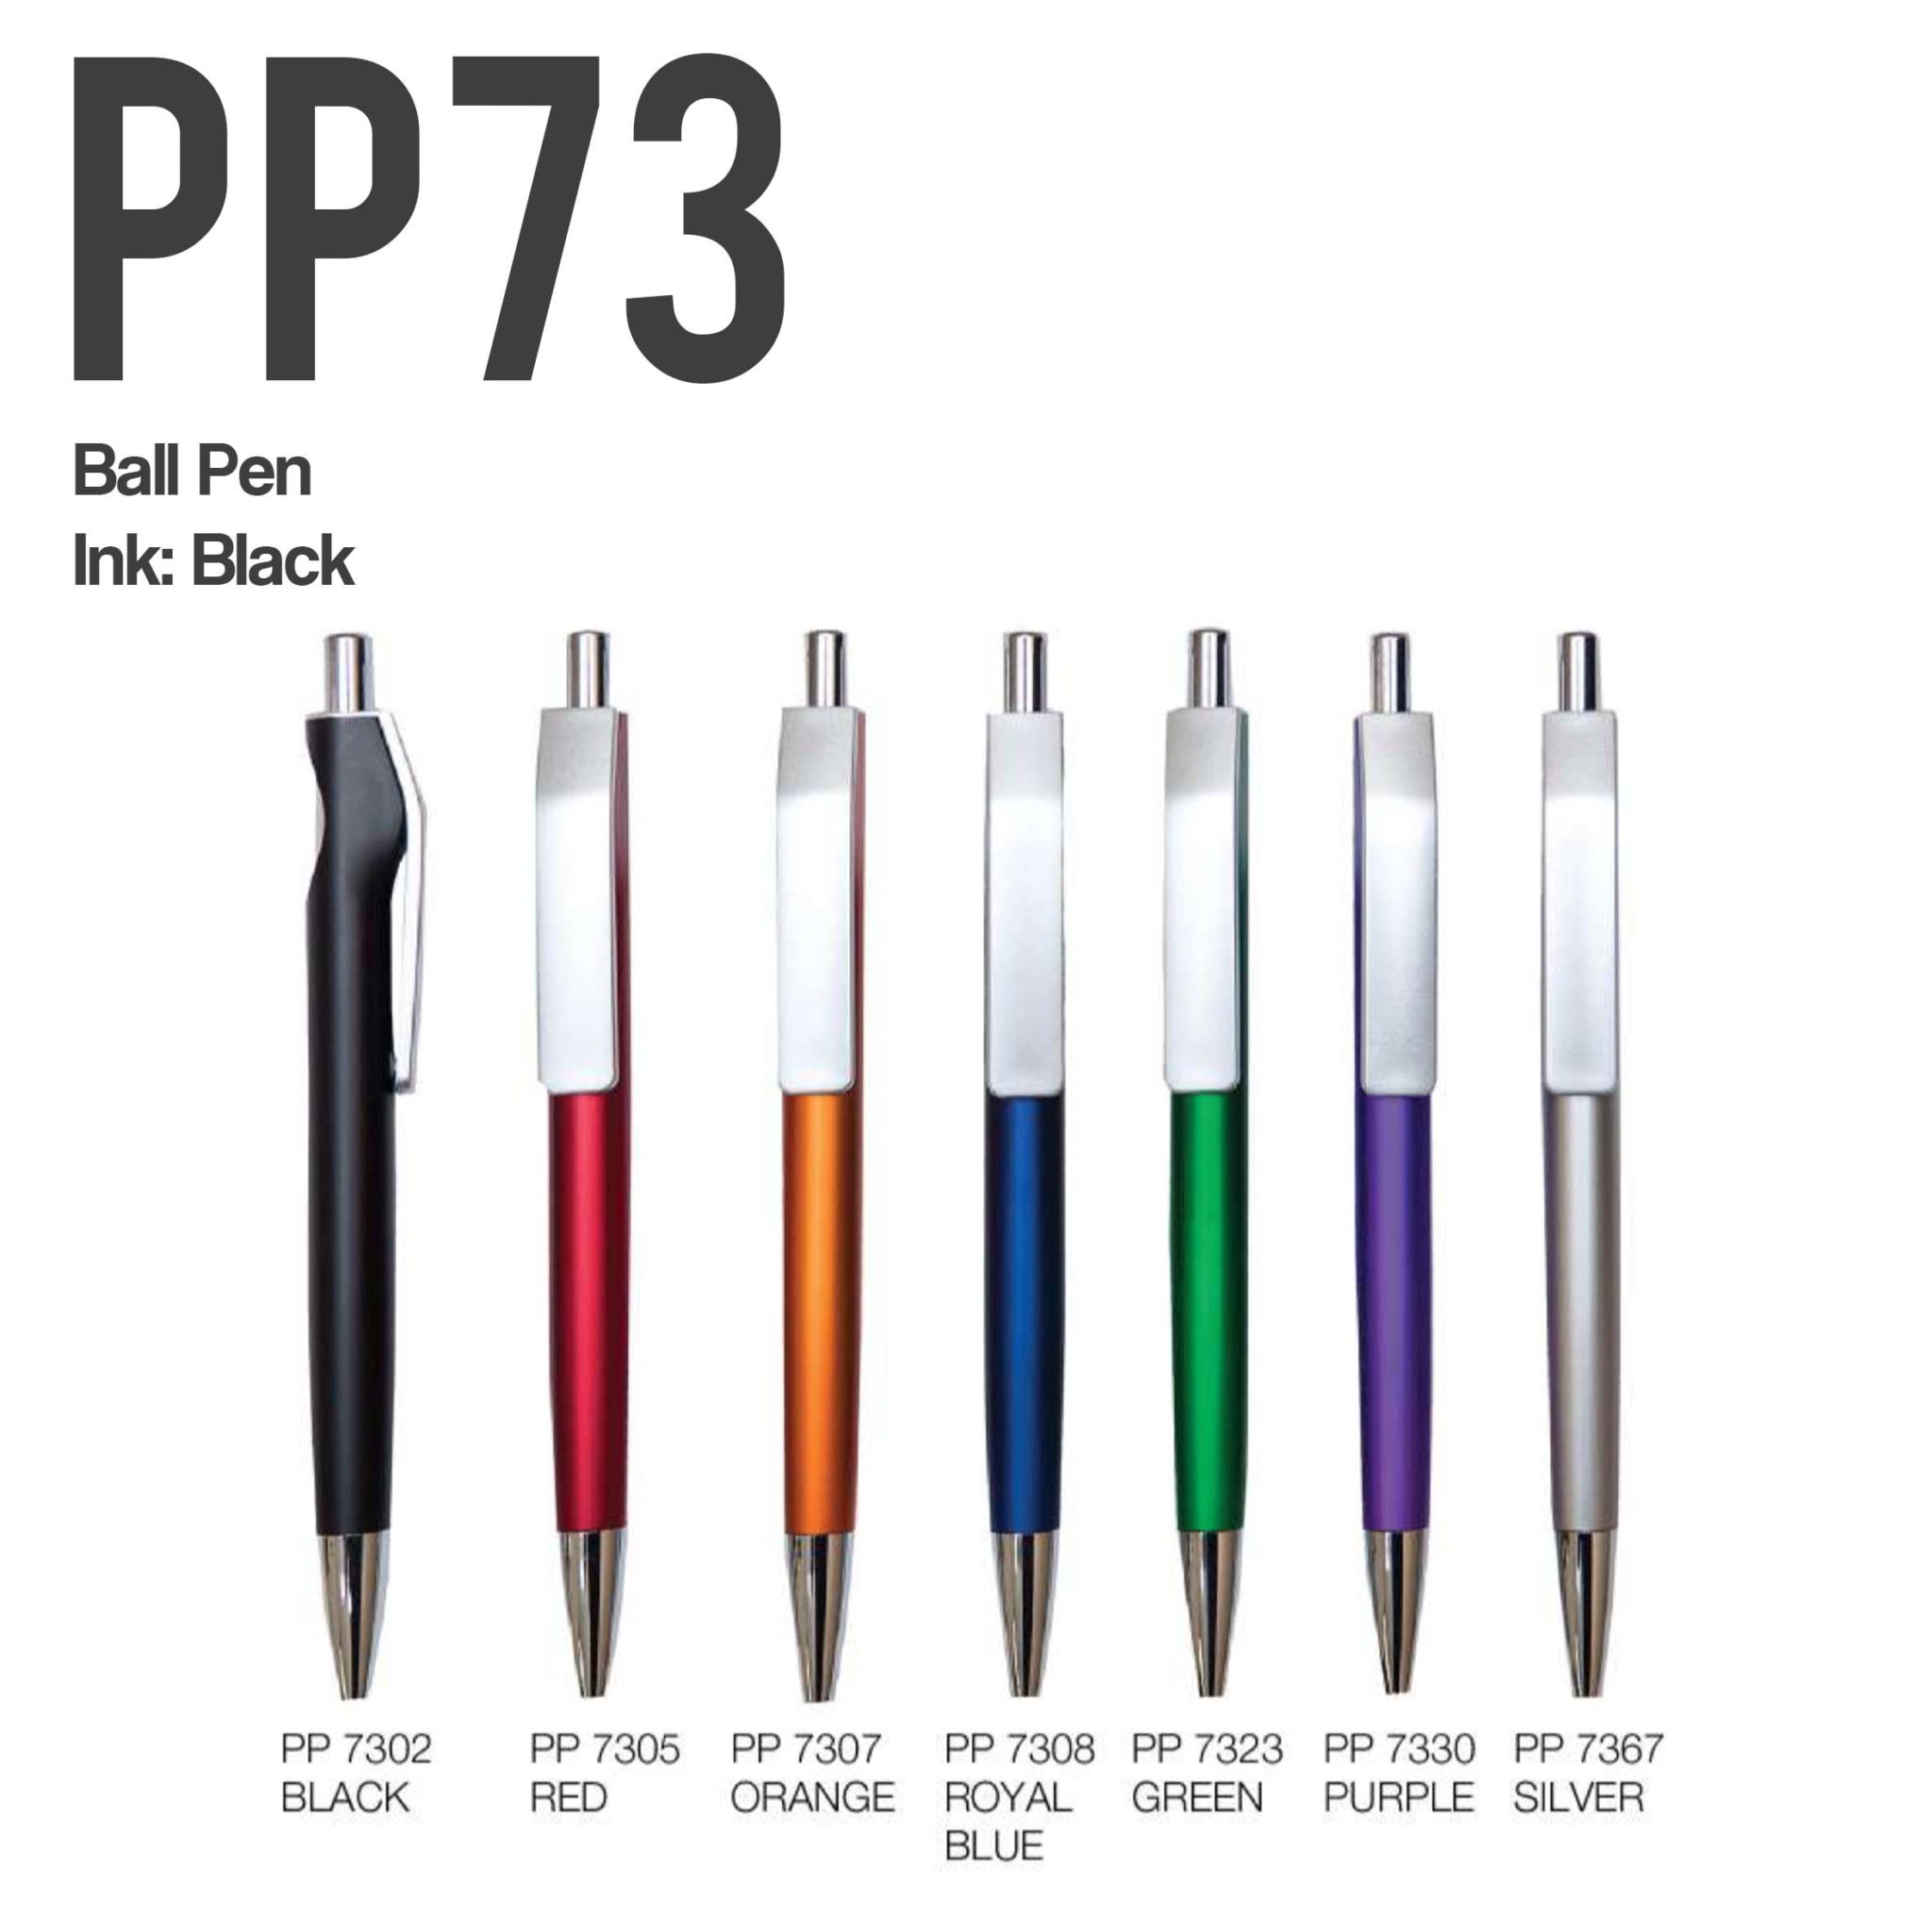 PP73 plastic pen scaled